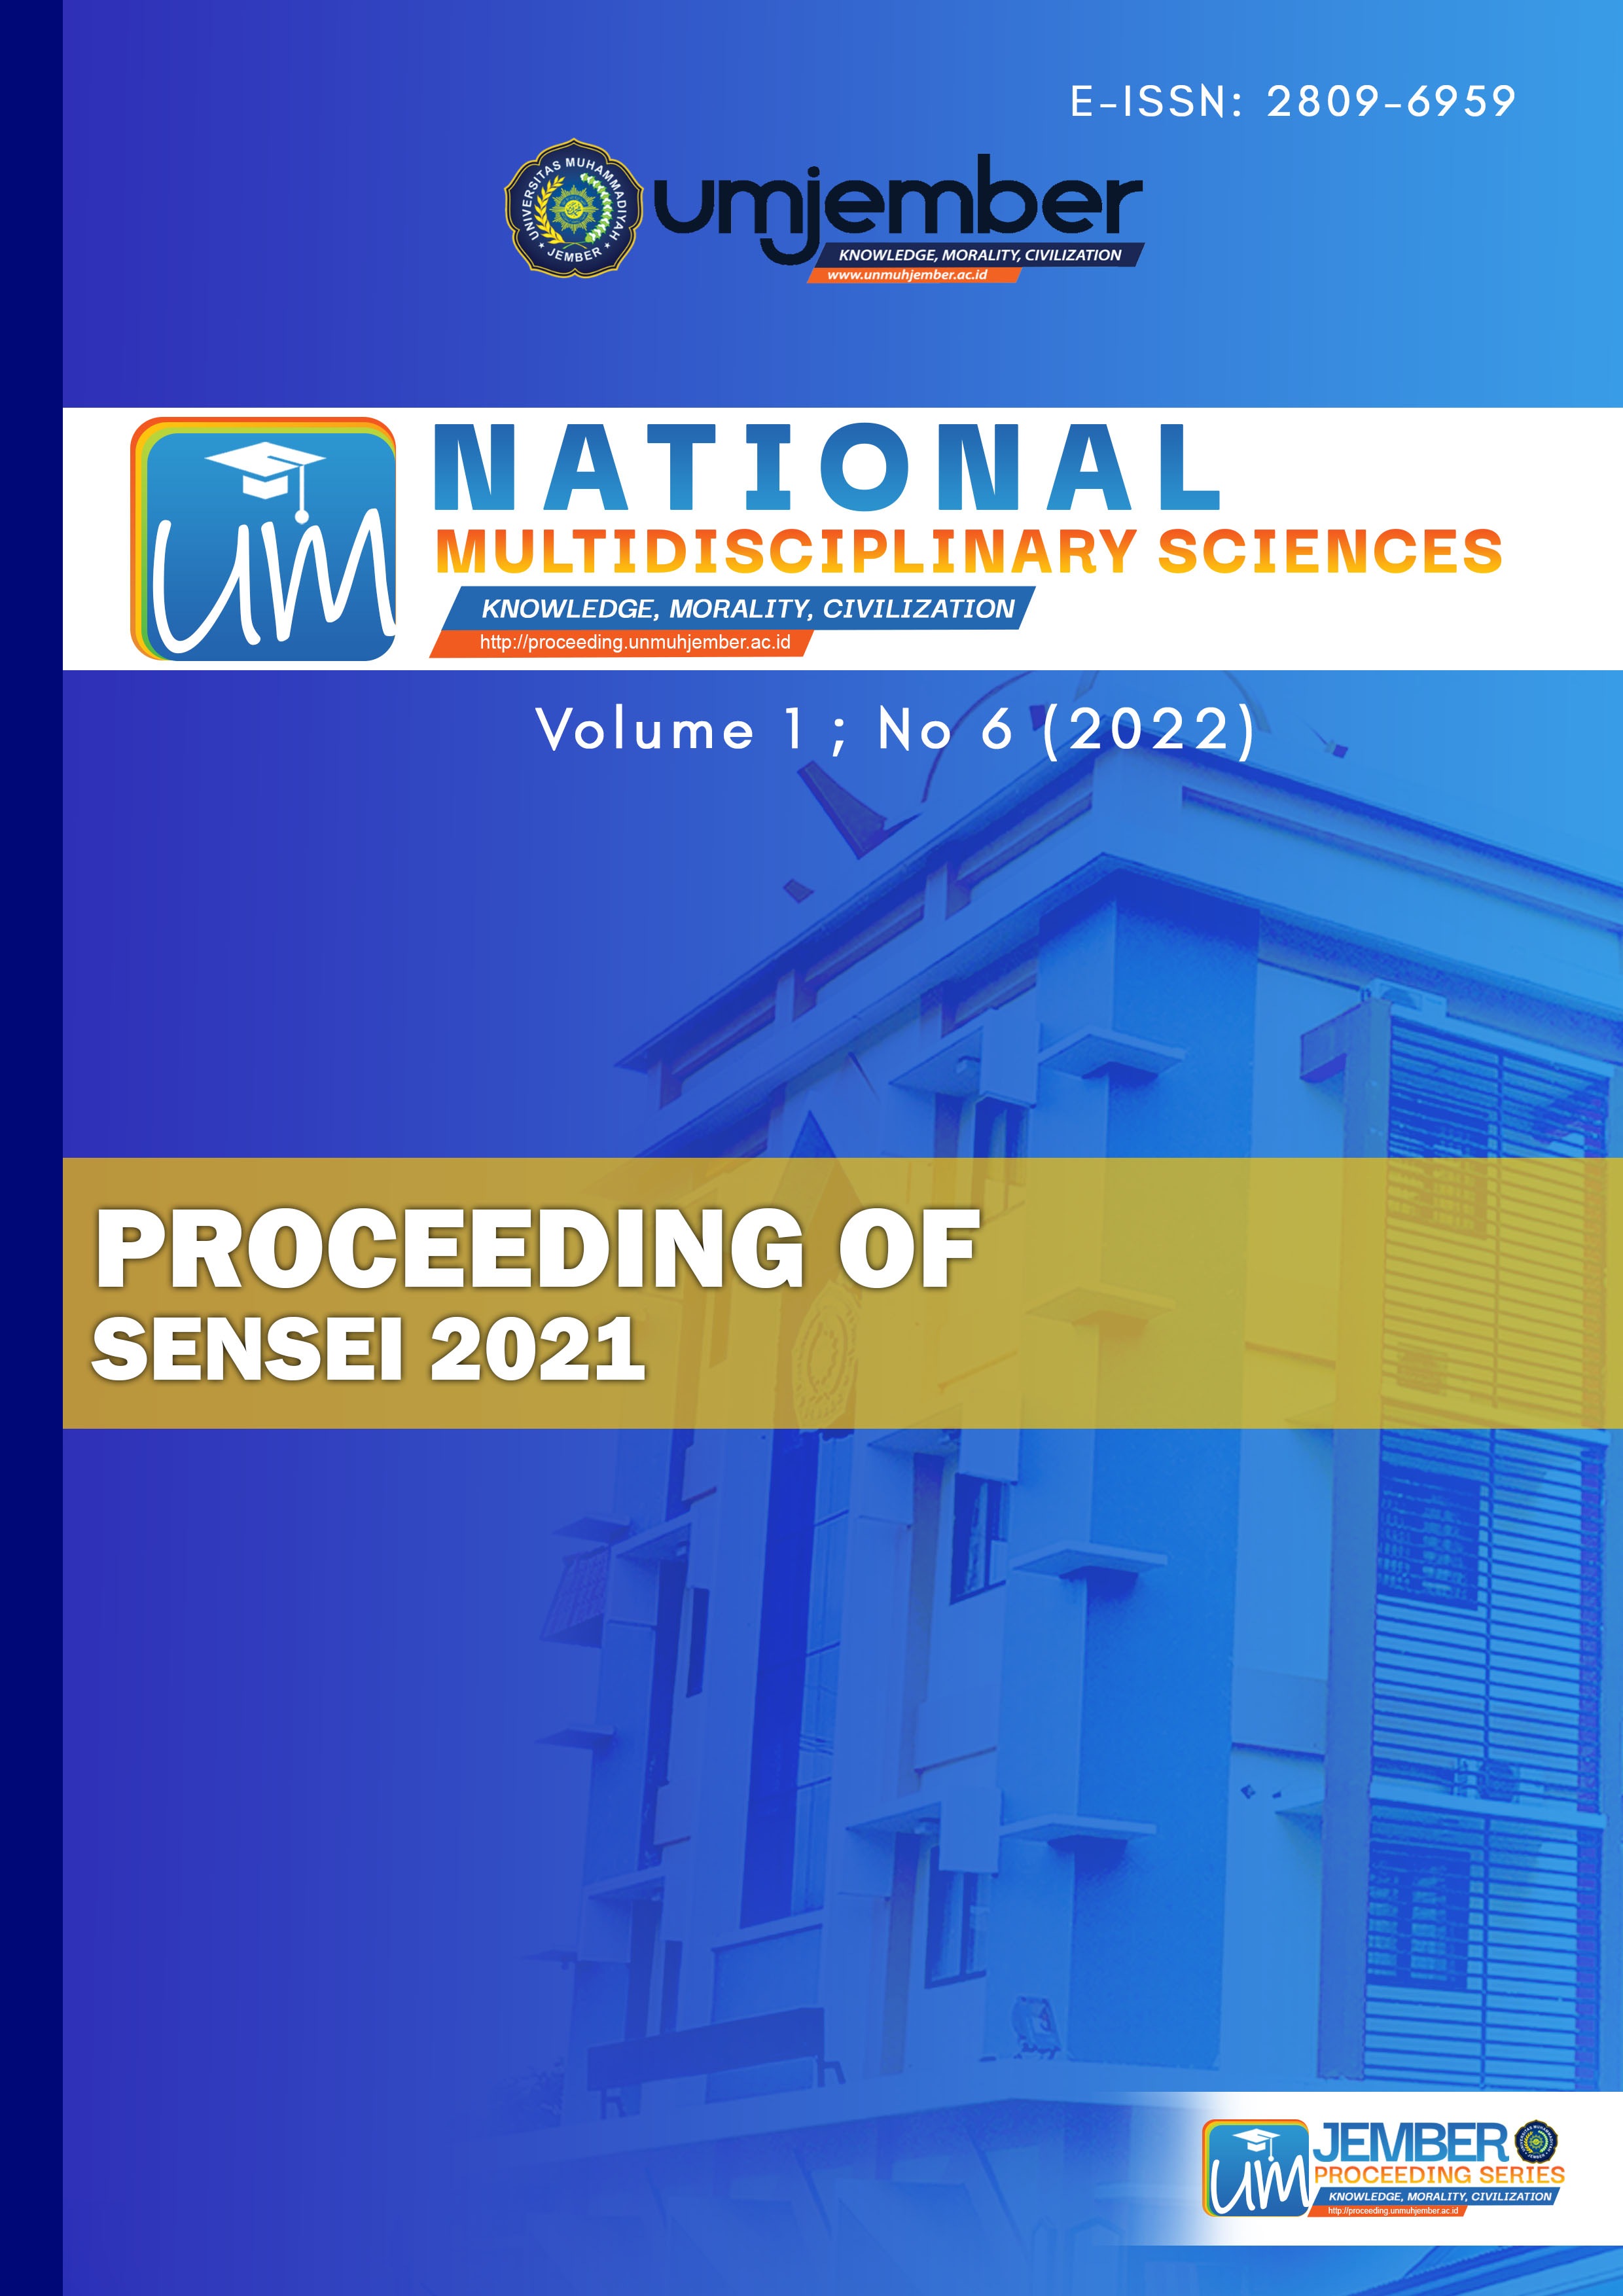 					View Vol. 1 No. 6 (2022): Proceedings SENSEI 2021
				